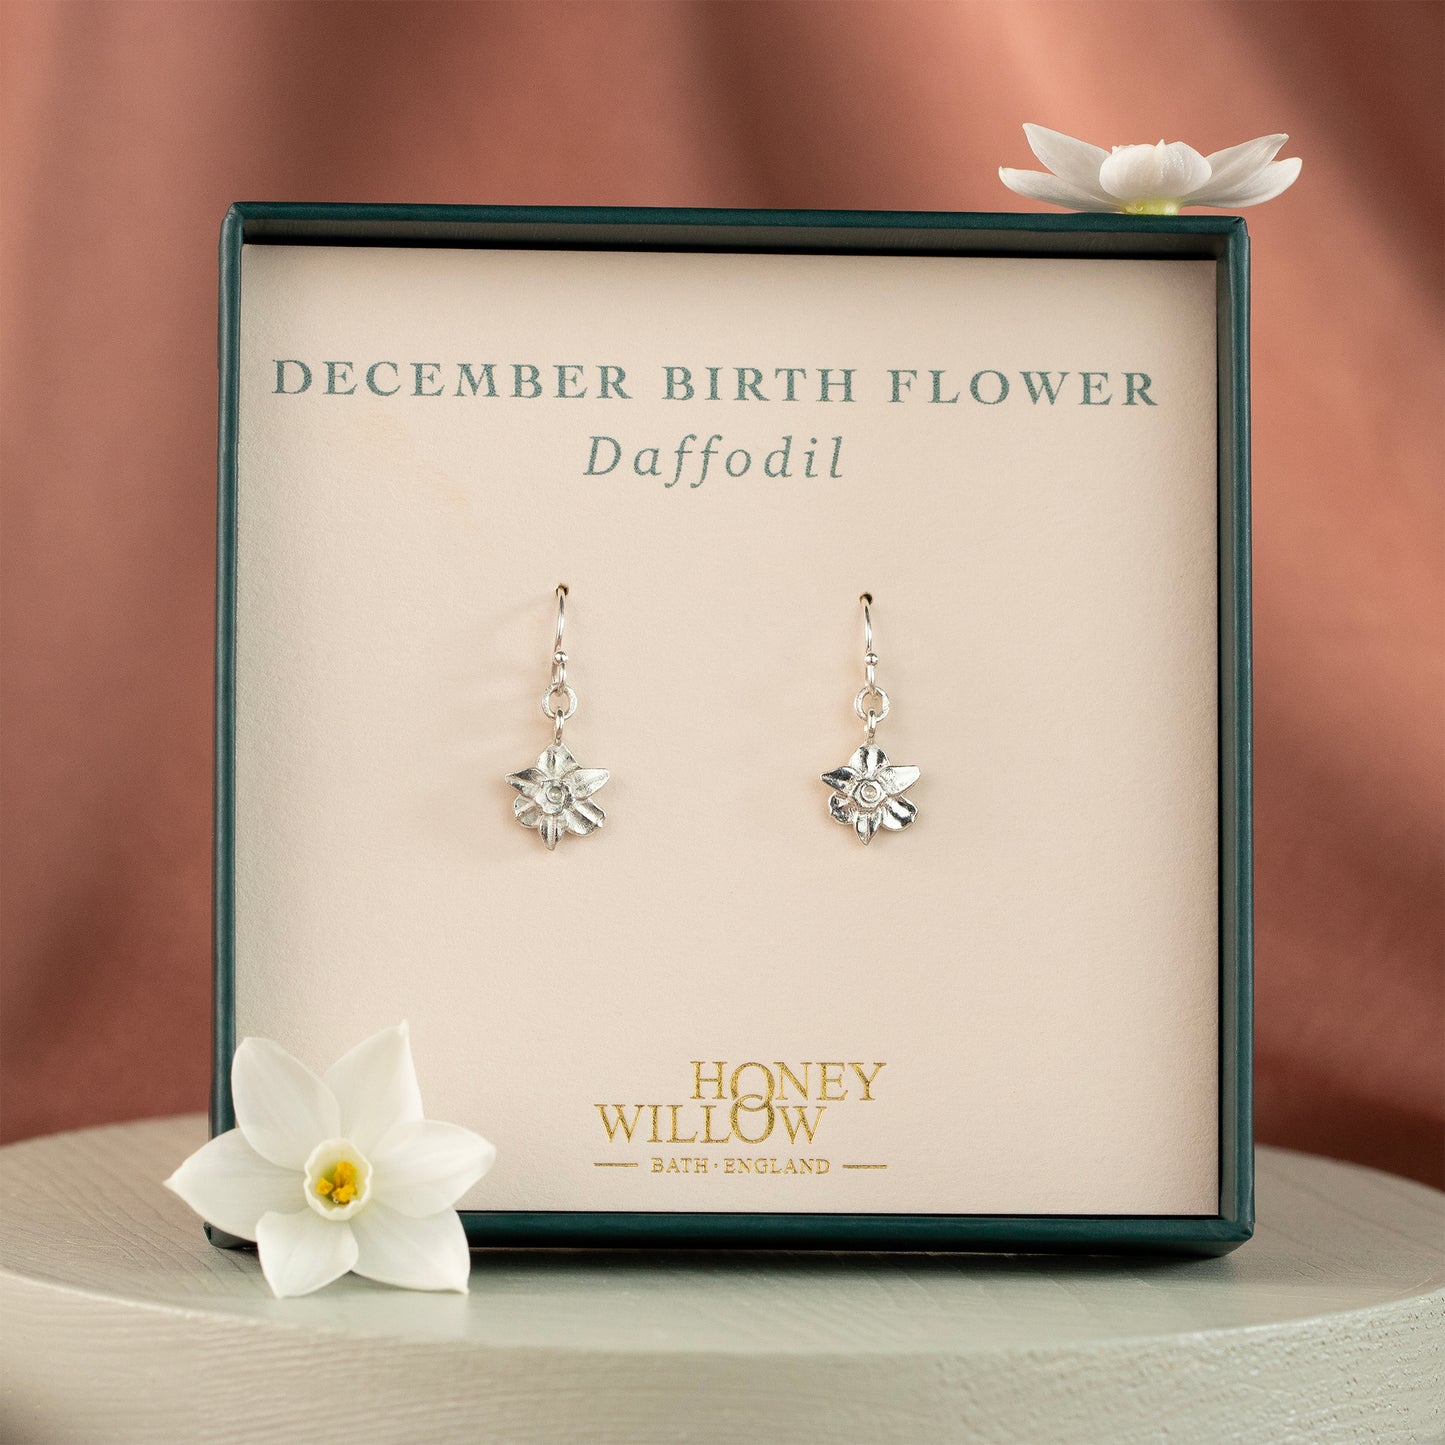 December Birth Flower Earrings - Daffodil - Silver